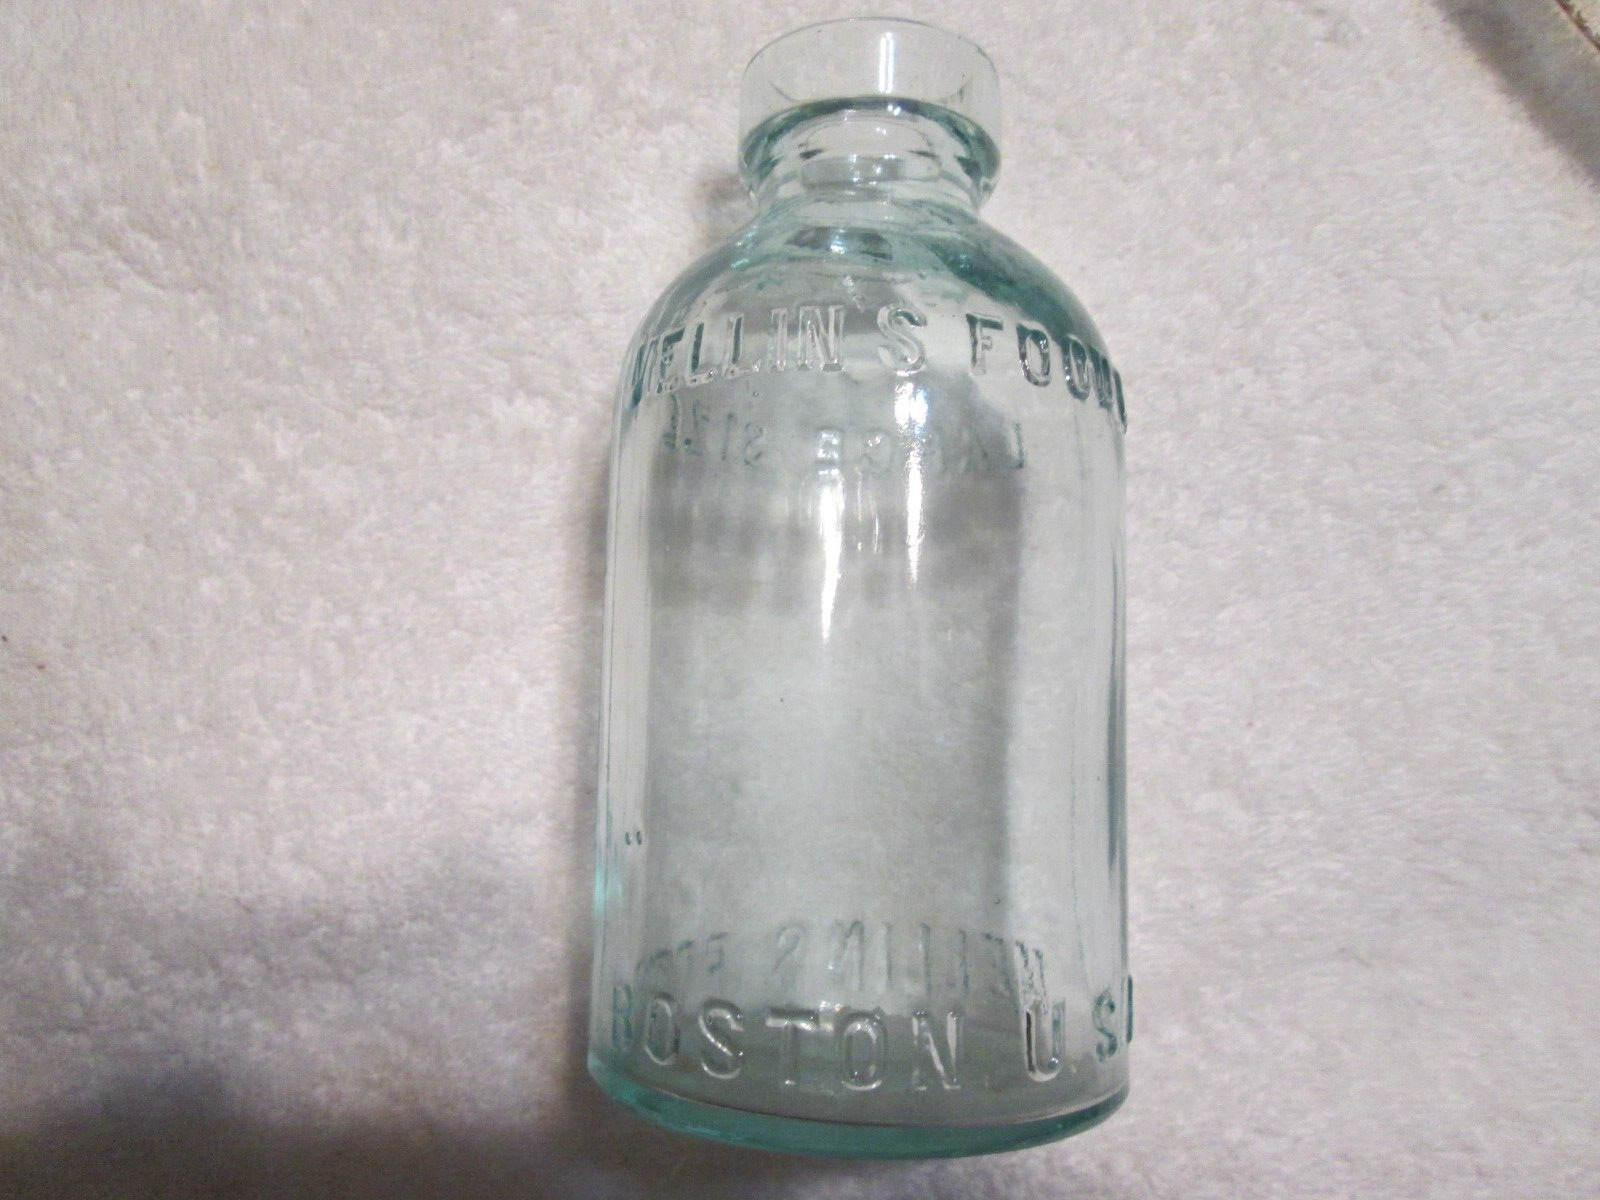 Antique Mellin\'s Food  Co Jar Bottle Large Size Nice Clean Embossed